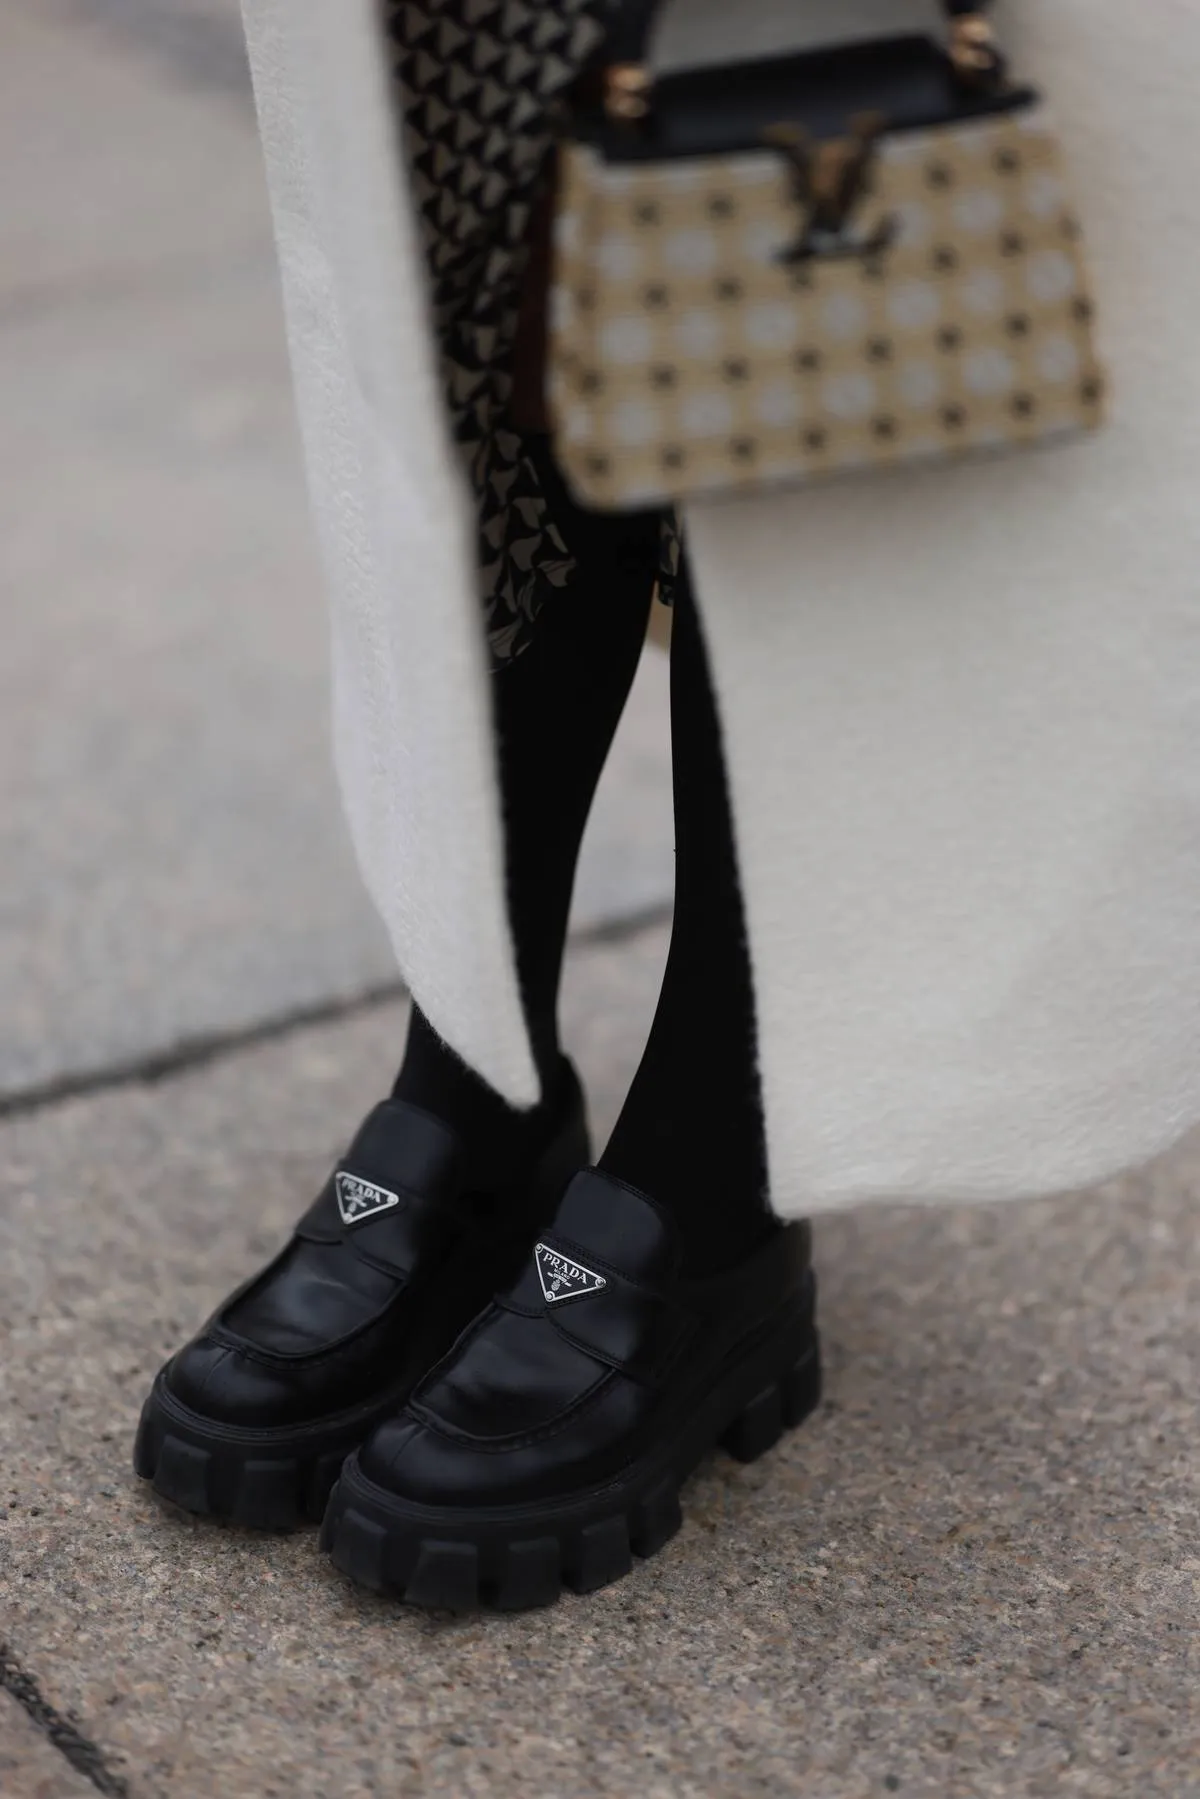 Prada black leather loafer, Edited asymmetrical black and white pattern skirt, 